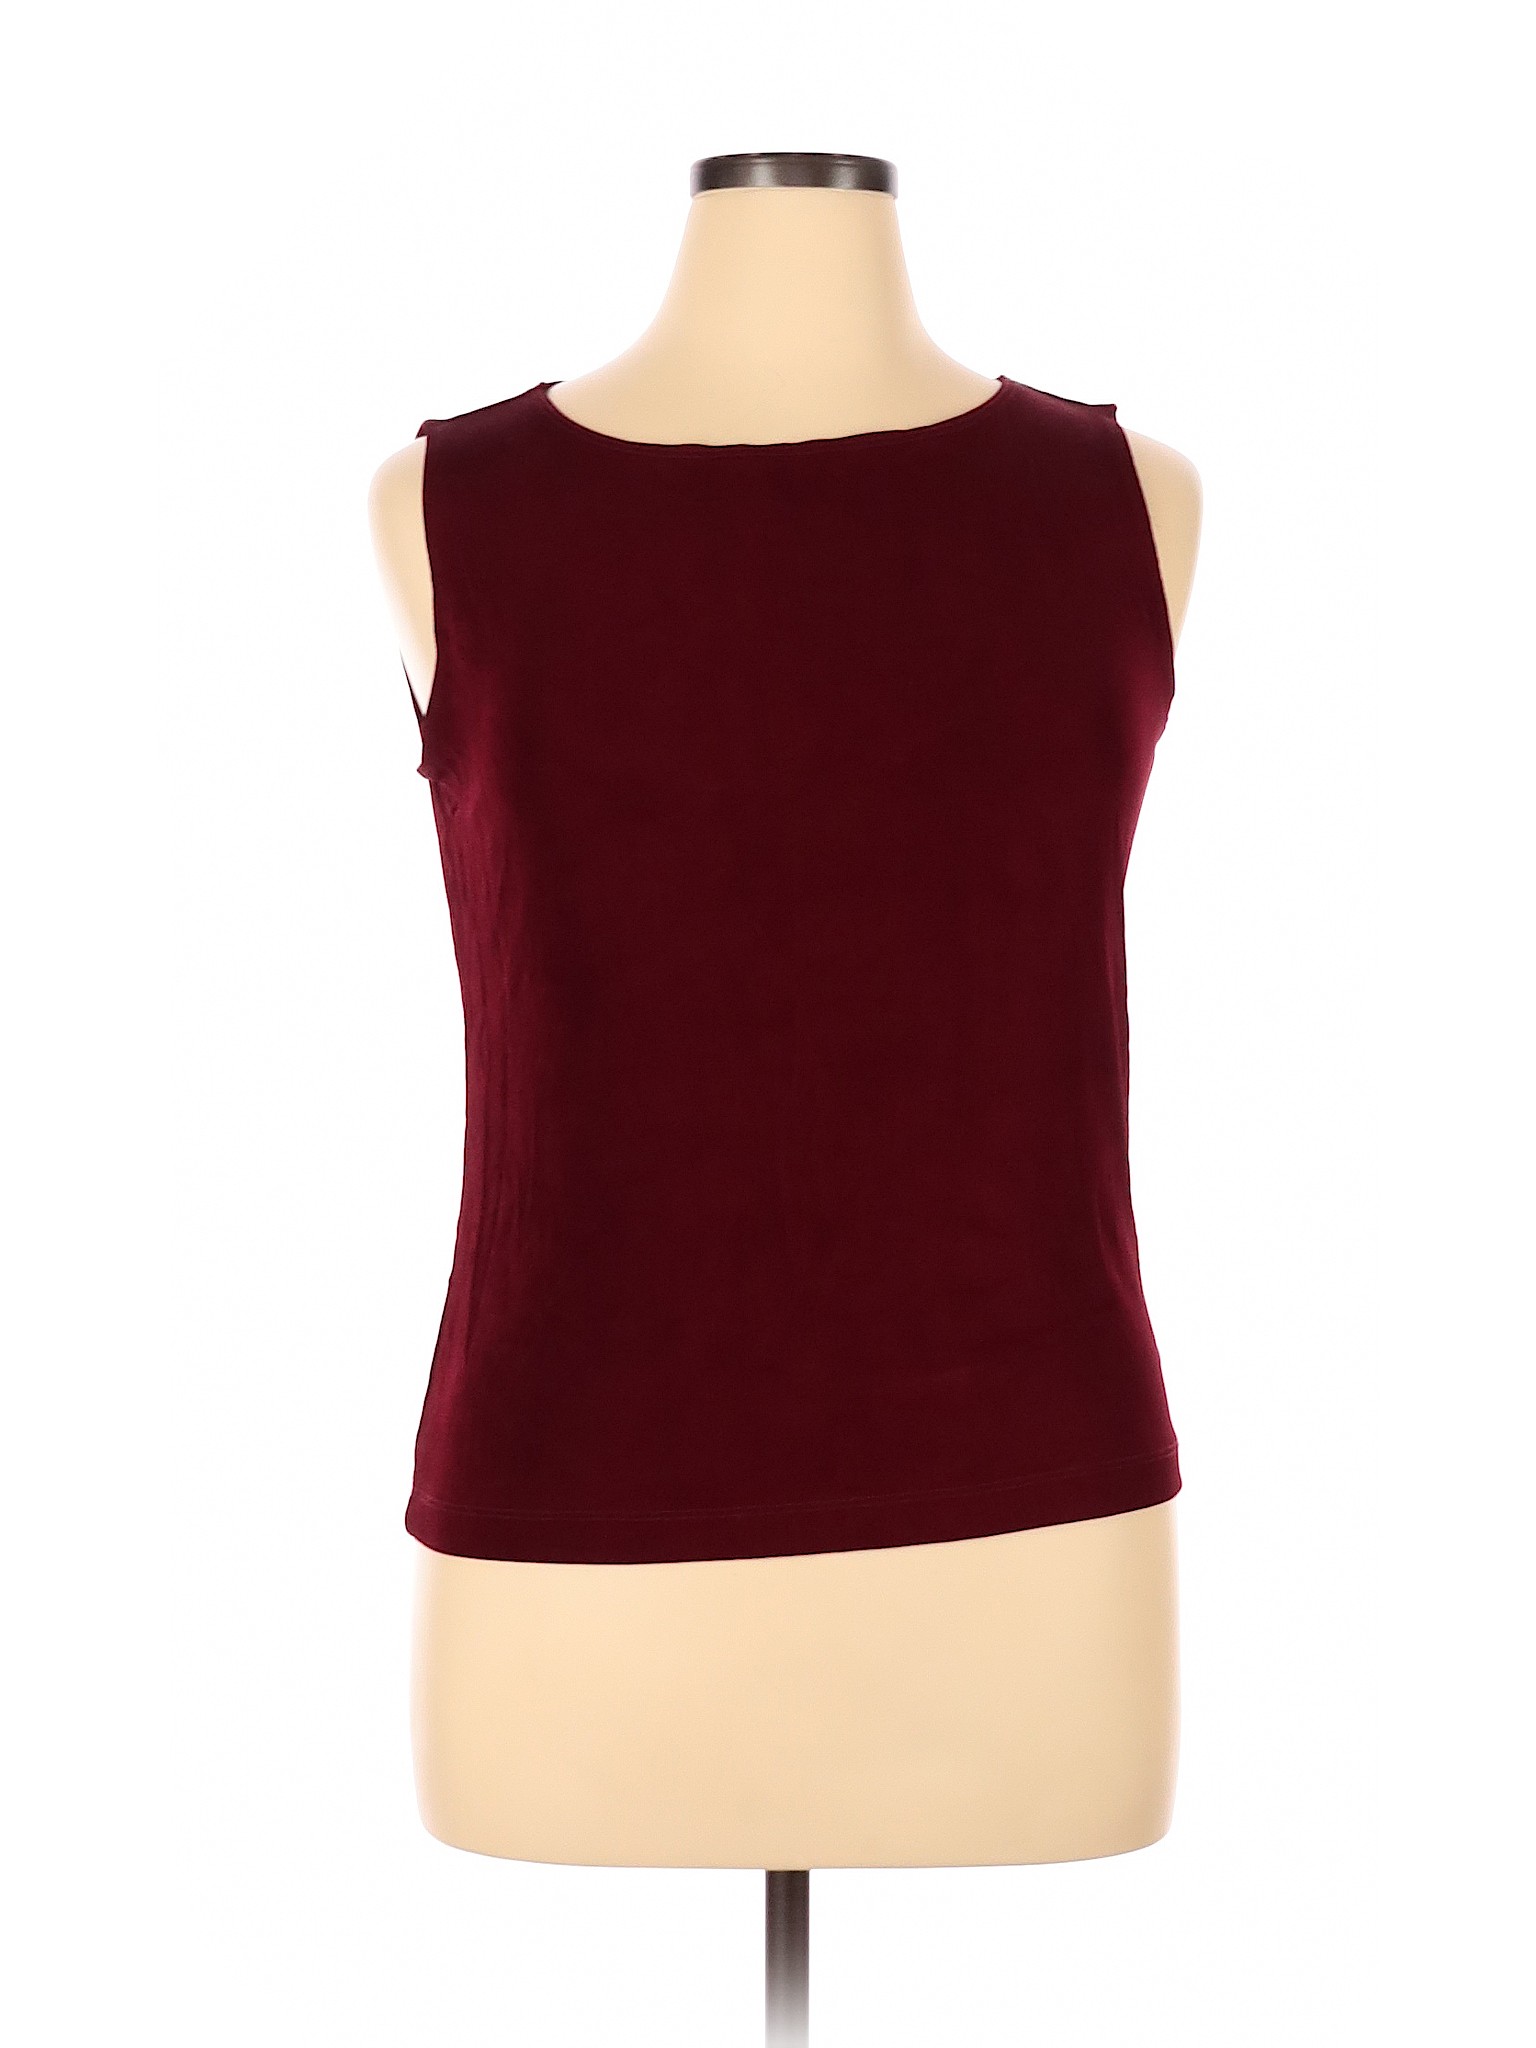 Chico's Women Red Sleeveless Top XL | eBay